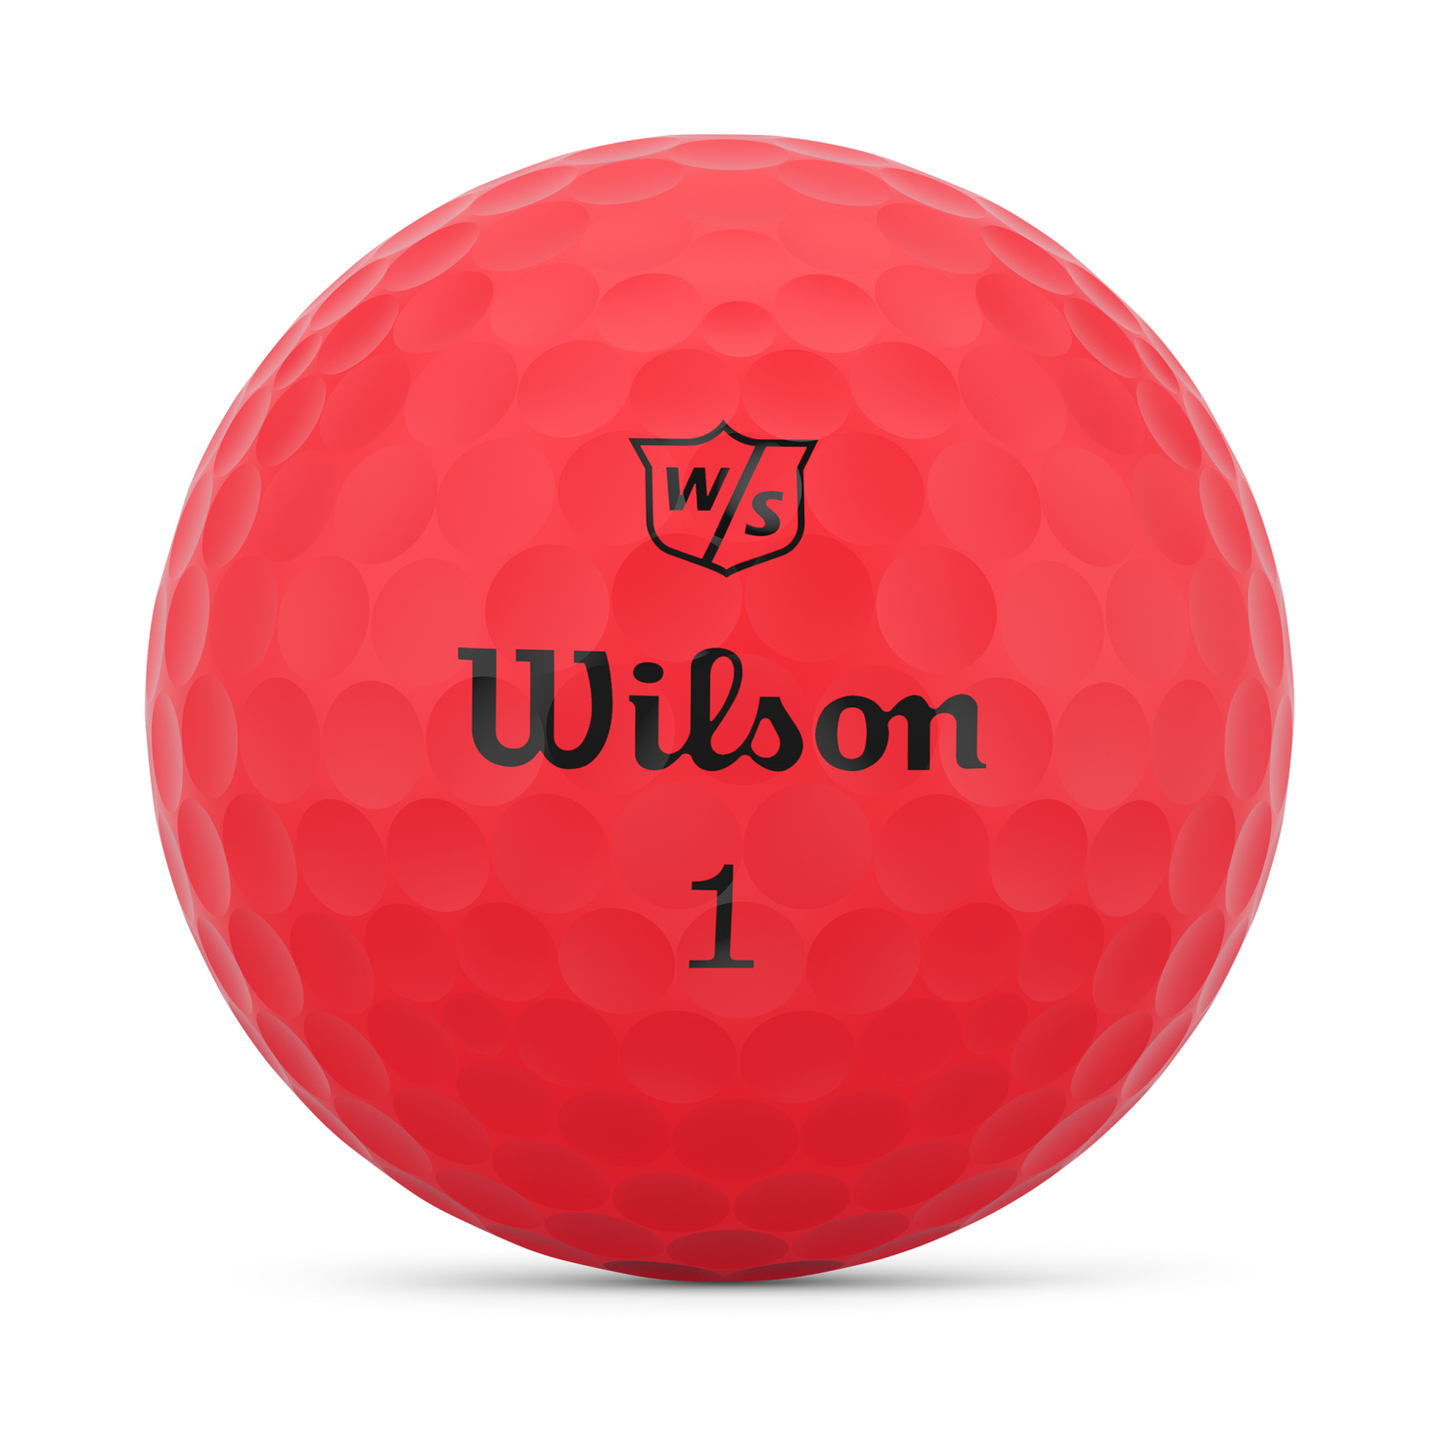 Wilson Staff Duo Soft Golf Balls